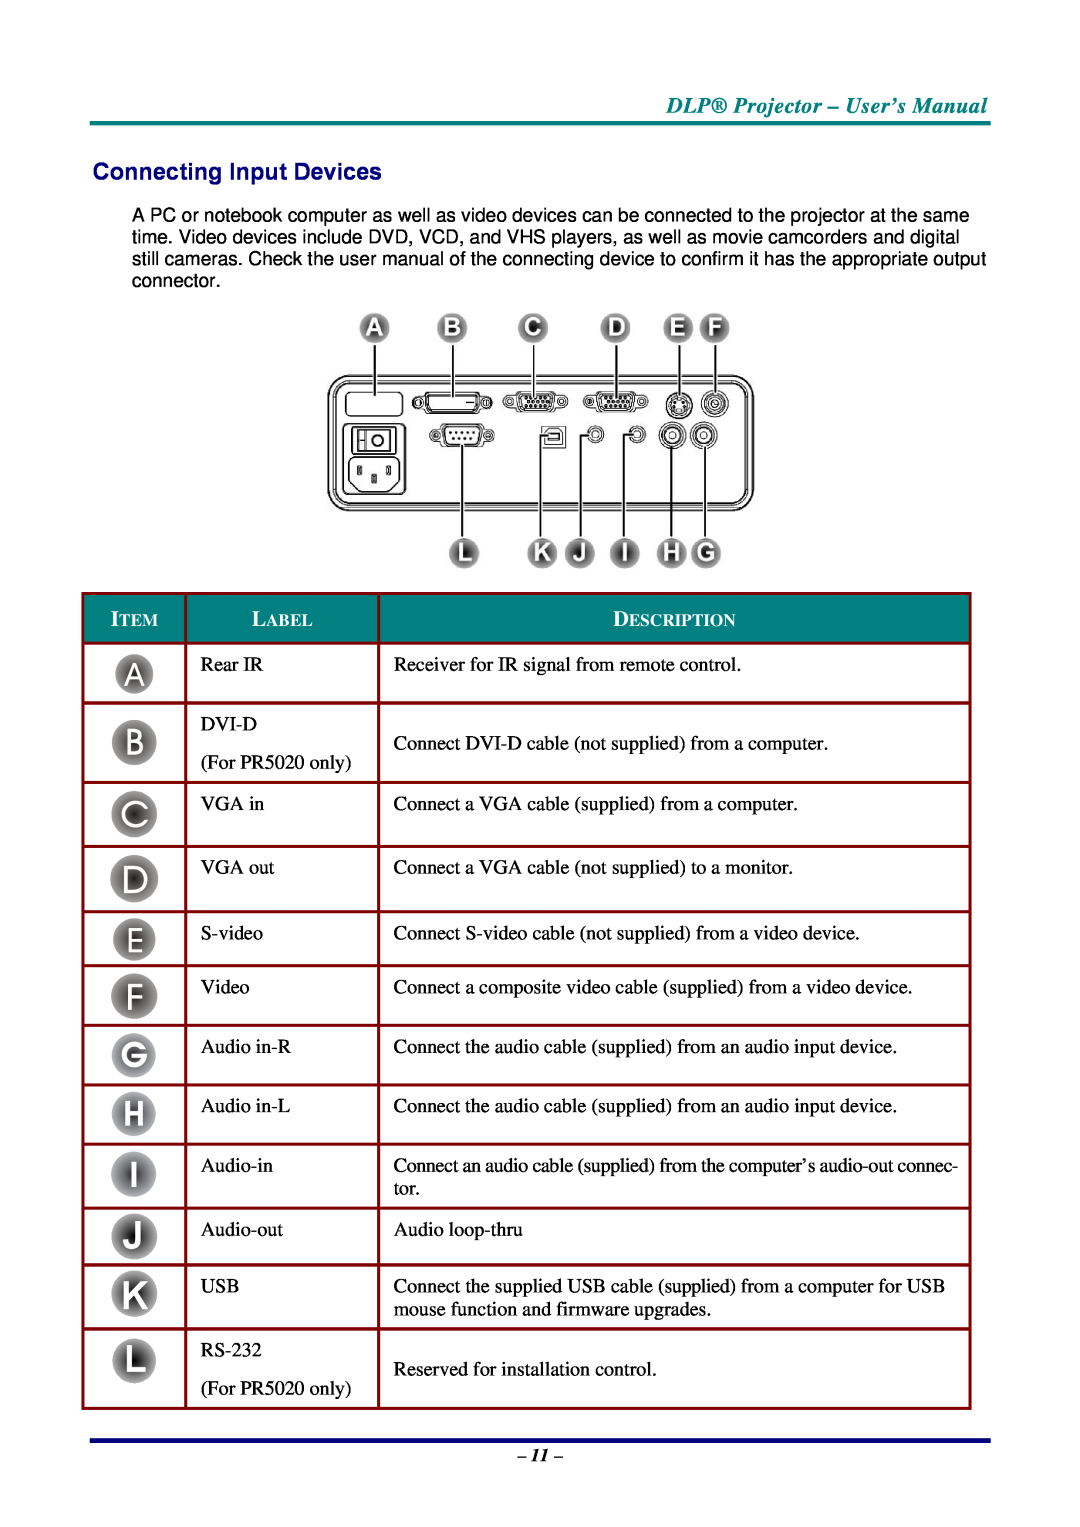 Planar PR5020, PR3020 manual Connecting Input Devices, DLP Projector - User’s Manual 